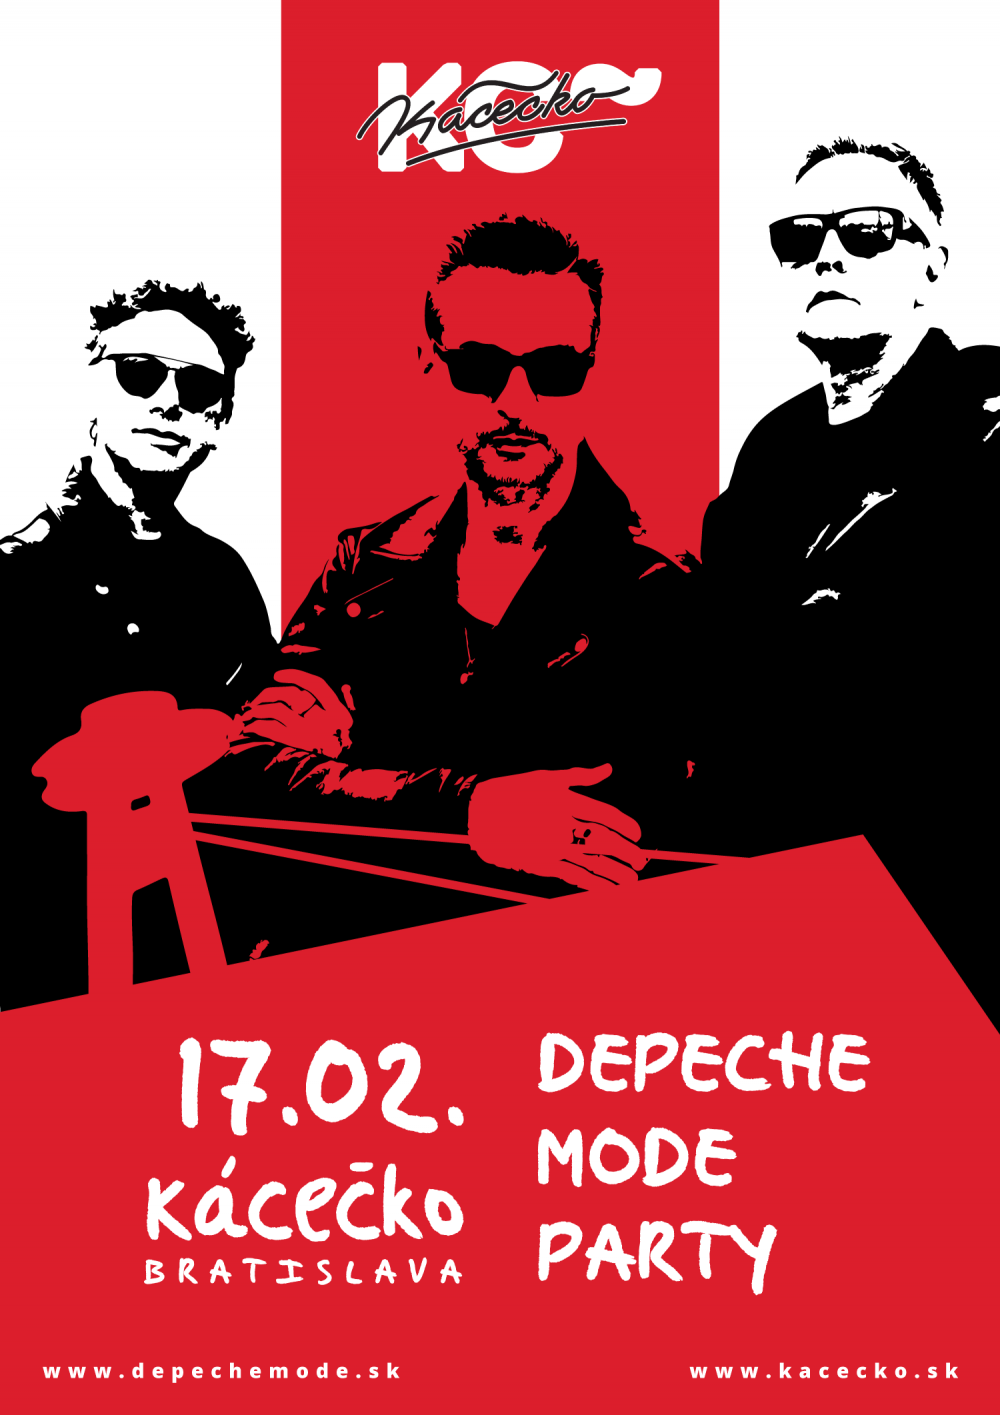 Plagát akcie: Depeche Mode Warm Up Party